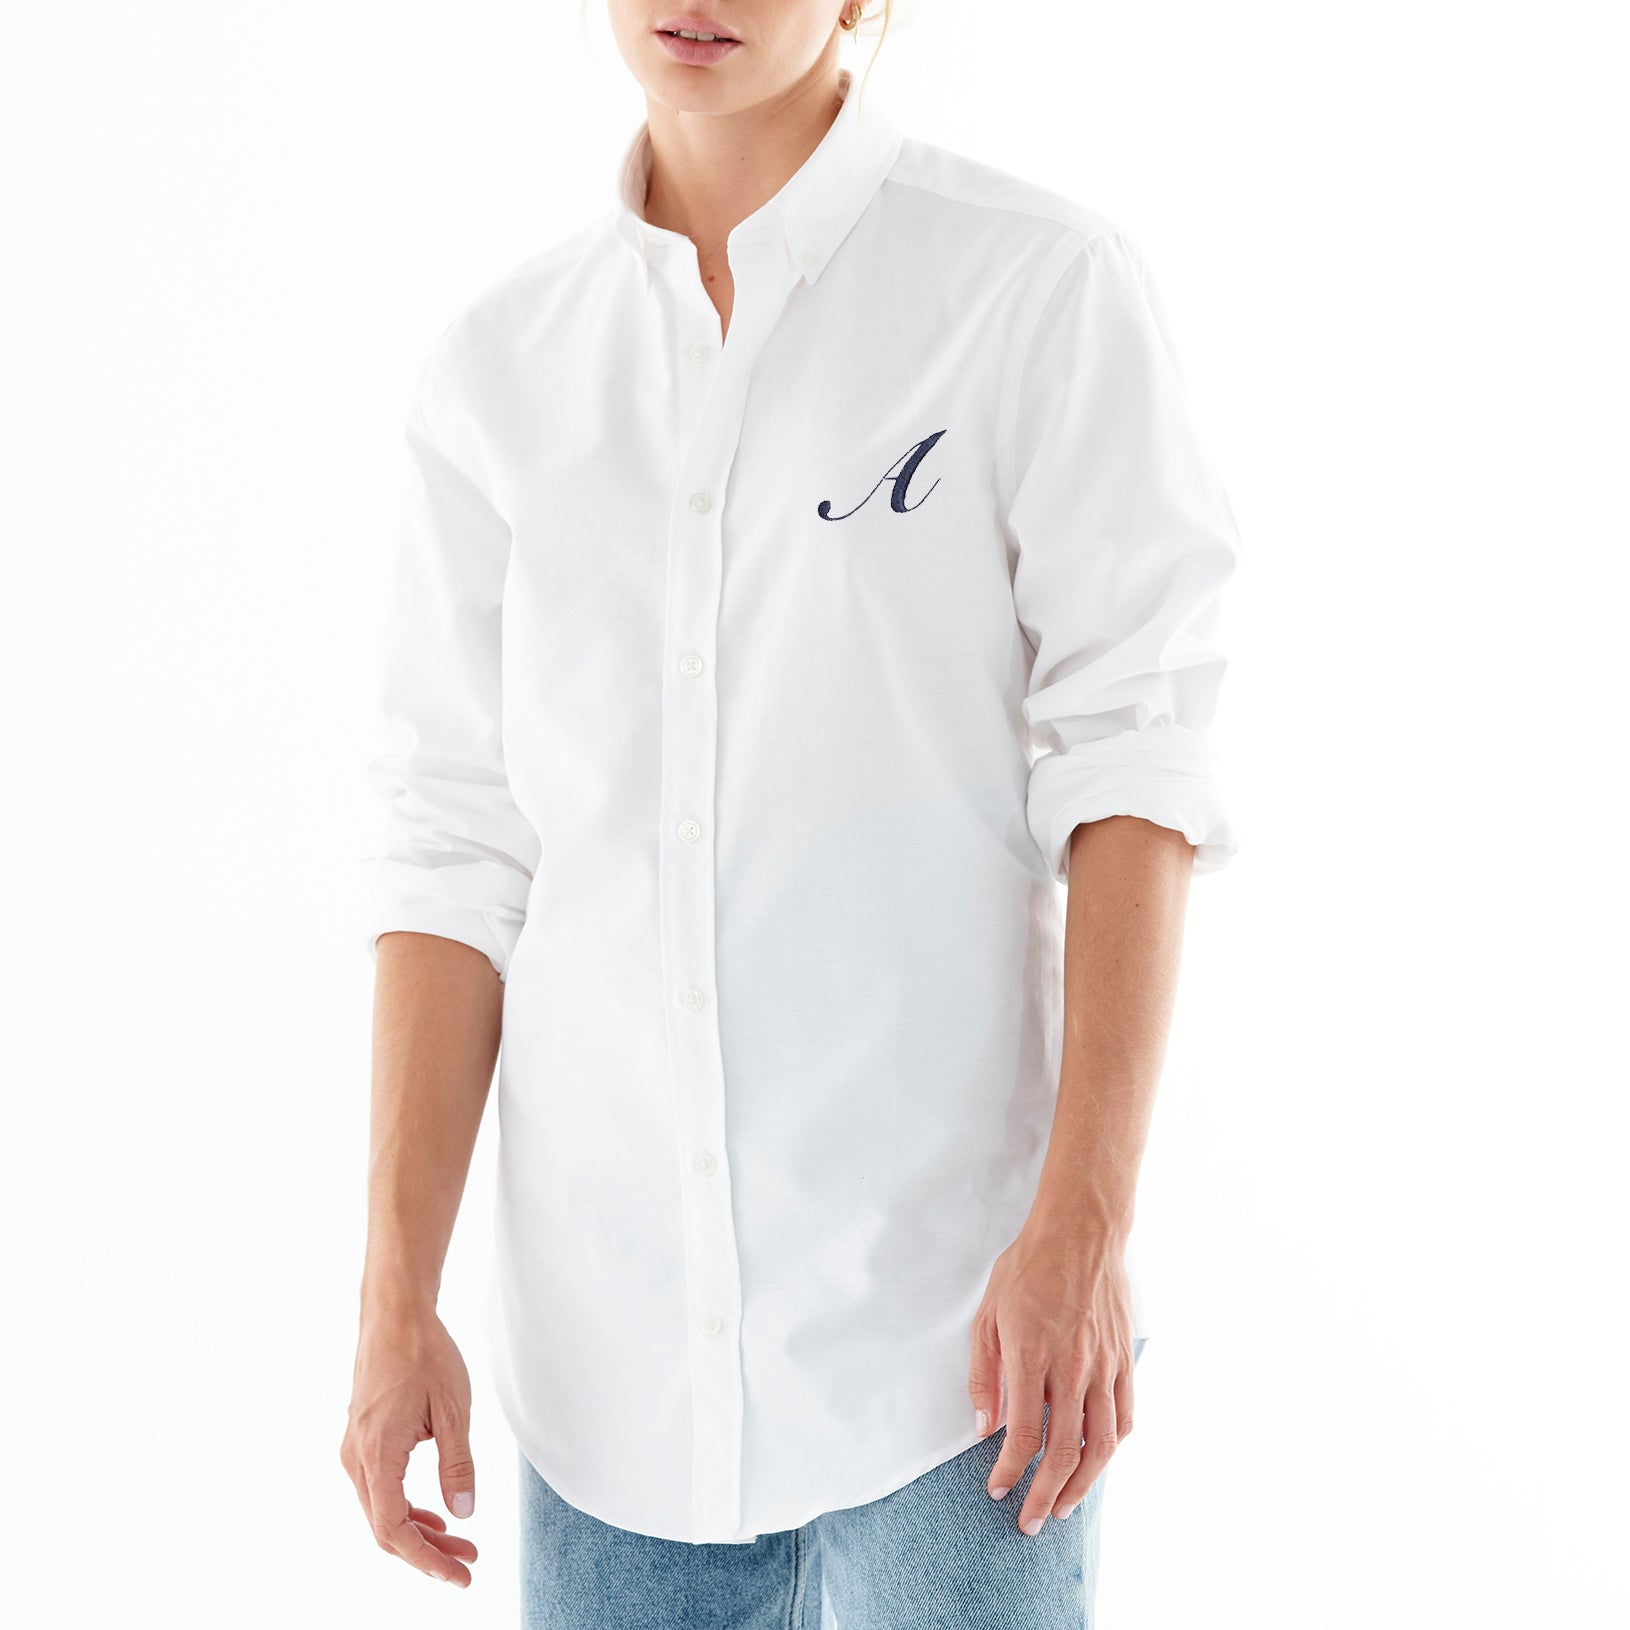 Personalized White Oxford Shirt